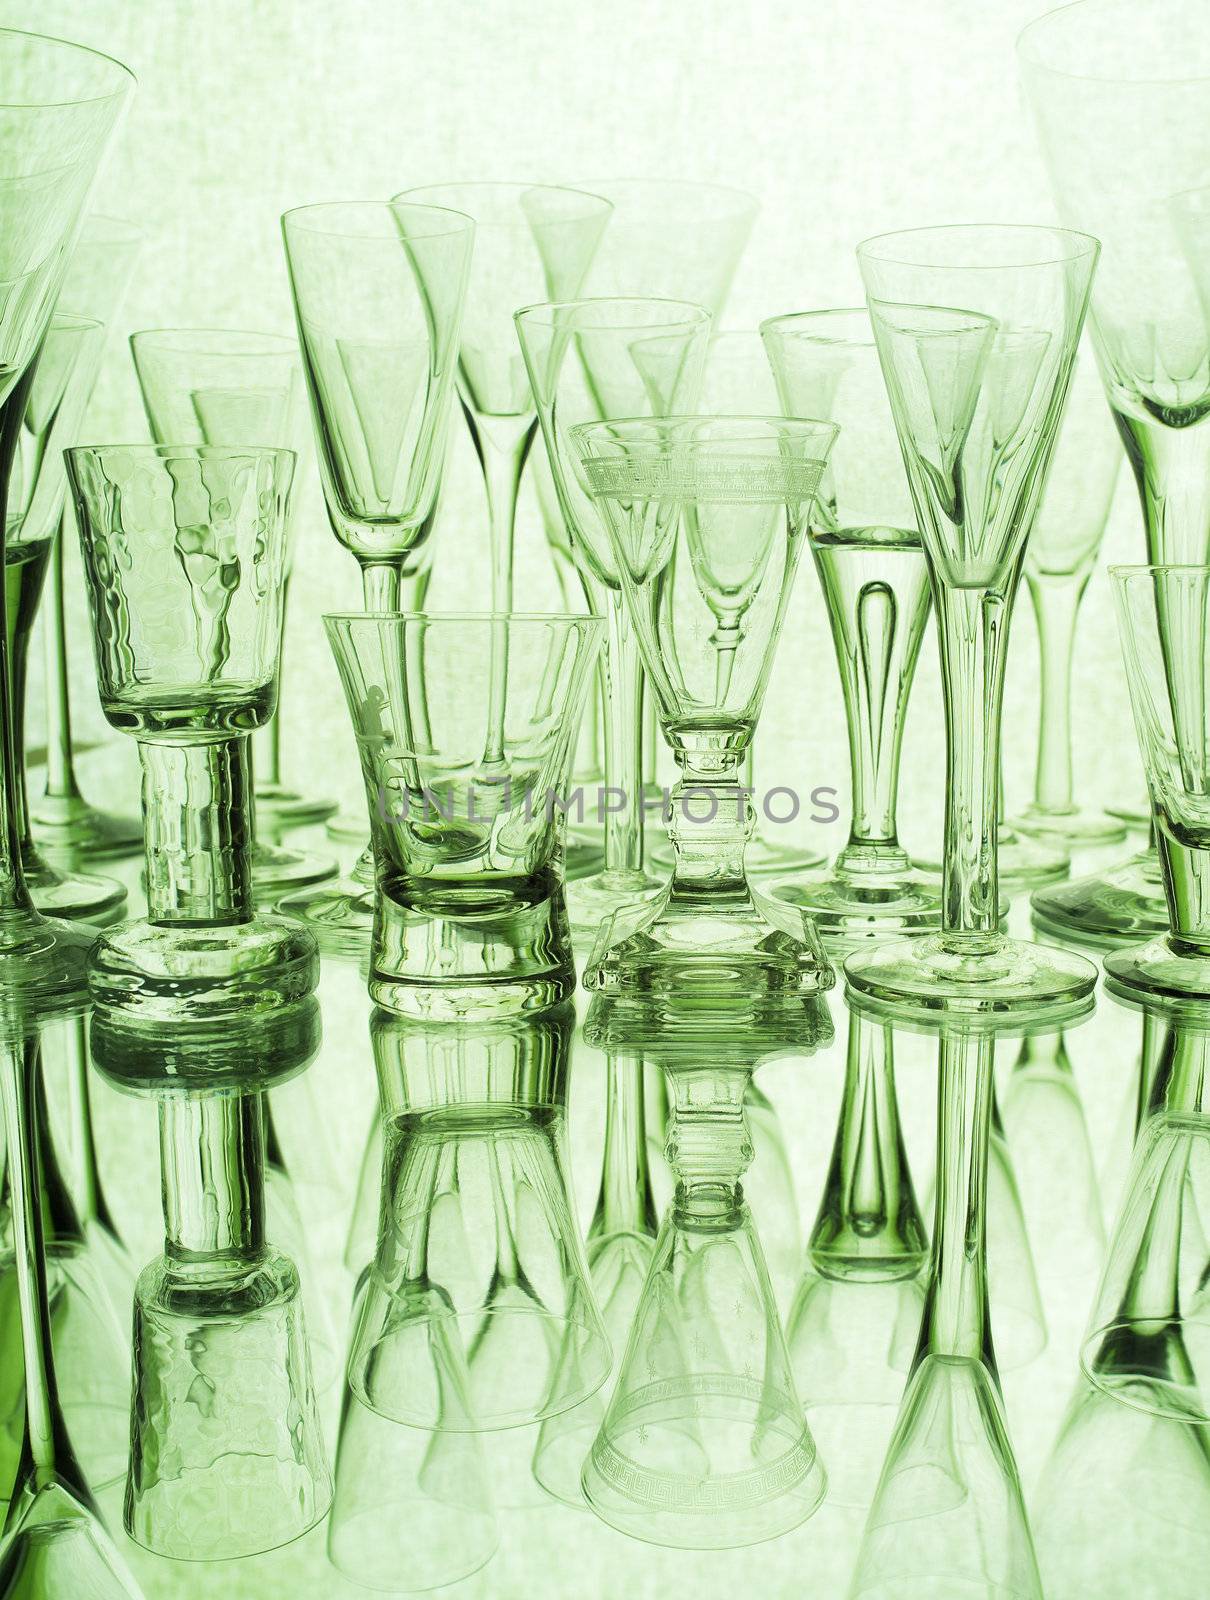 Glass still life by gemenacom